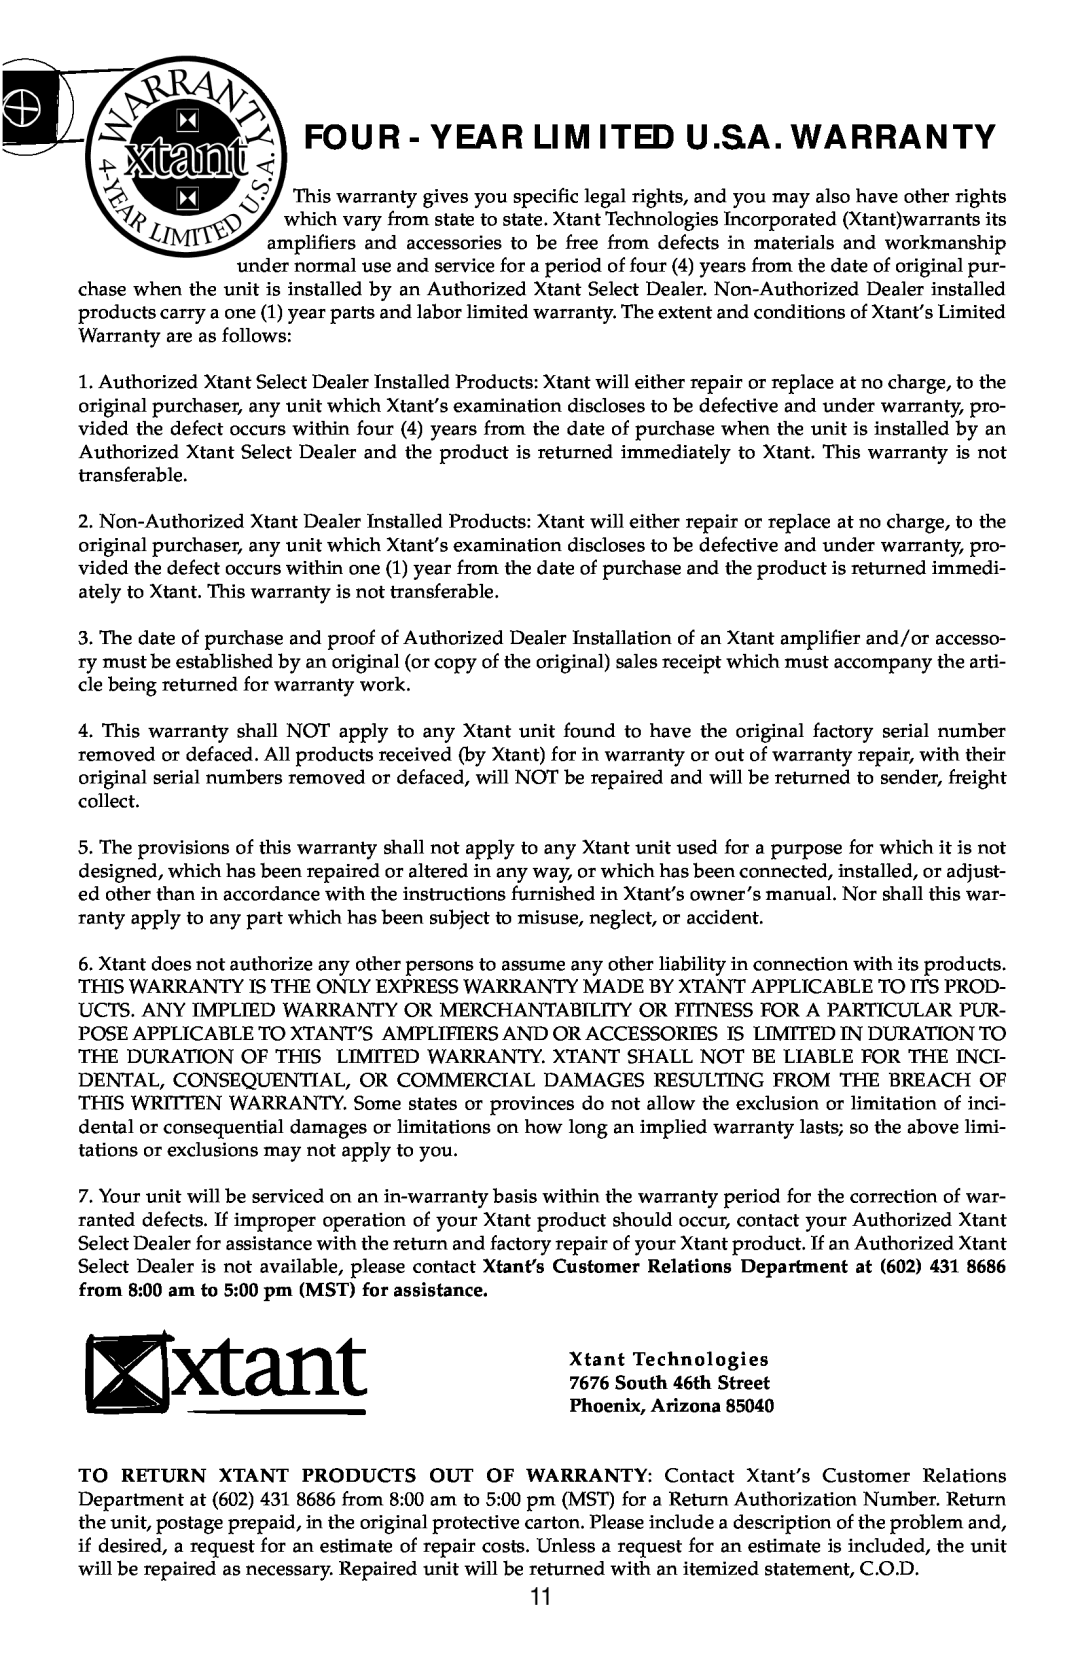 Xtant 3150X manual Four - Year Limited U.S.A. Warranty, Xtant Technologies 7676 South 46th Street, Phoenix, Arizona 